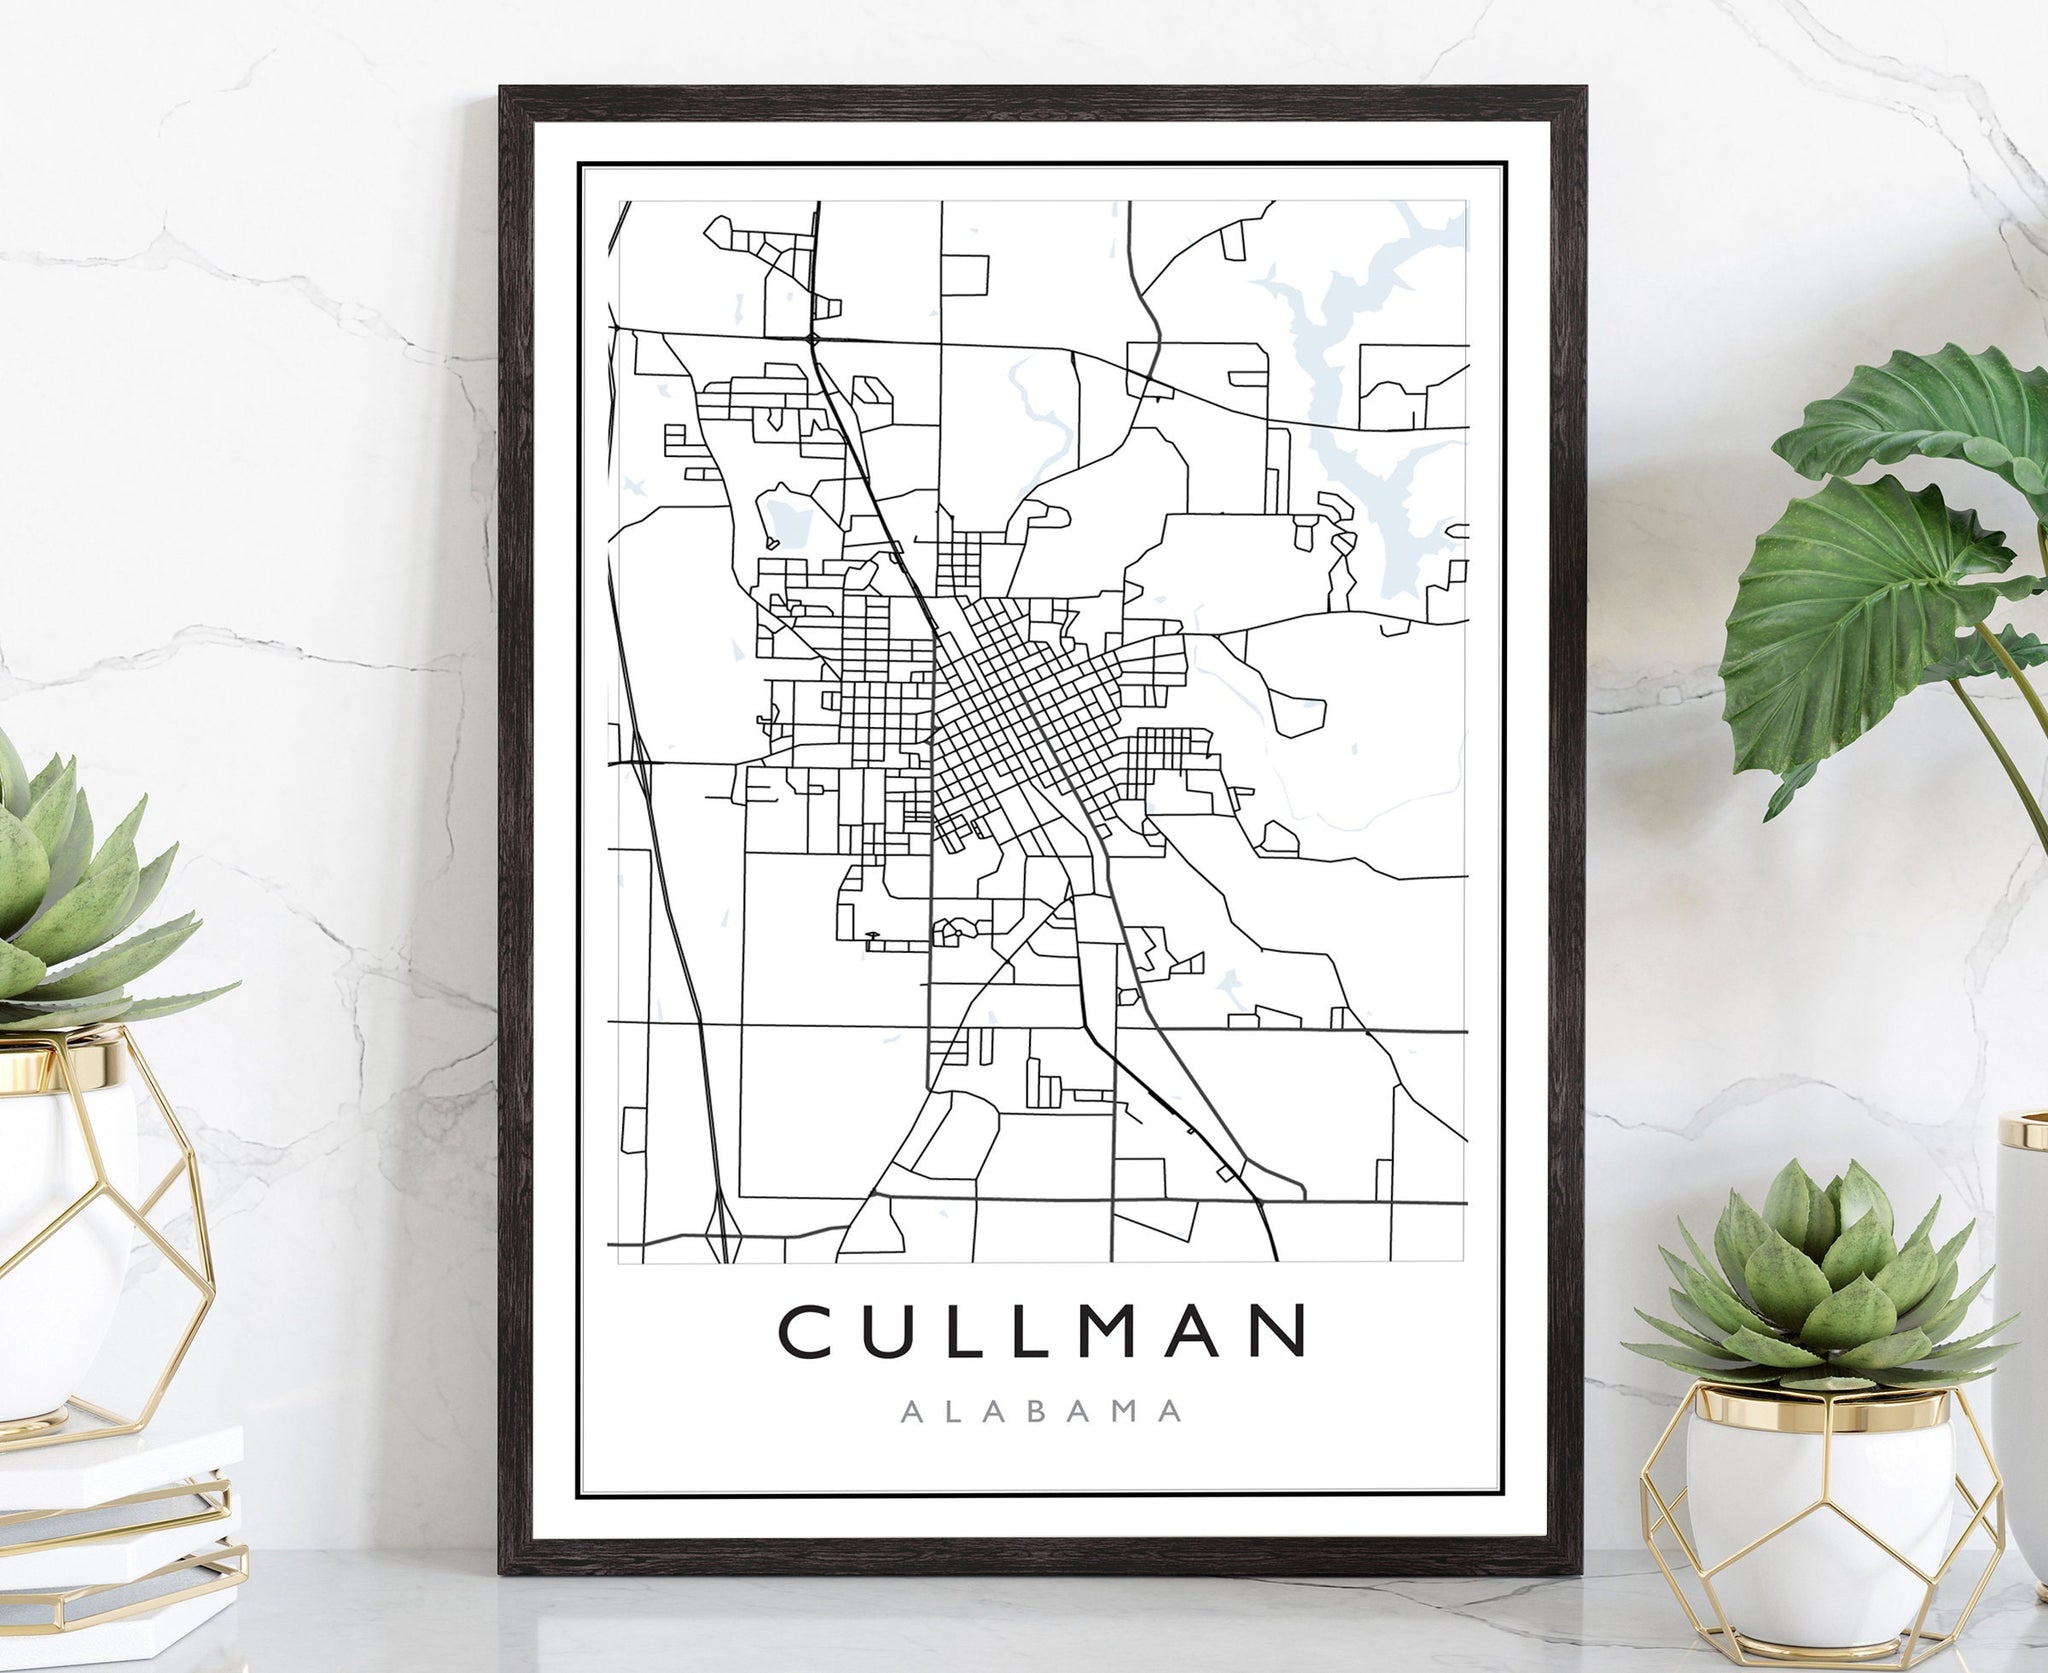 Cullman Alabama City Map, Alabama City Road Map Poster, City Street Map Print, Modern US City Map, Home Art Decor, Office Wall Art Print